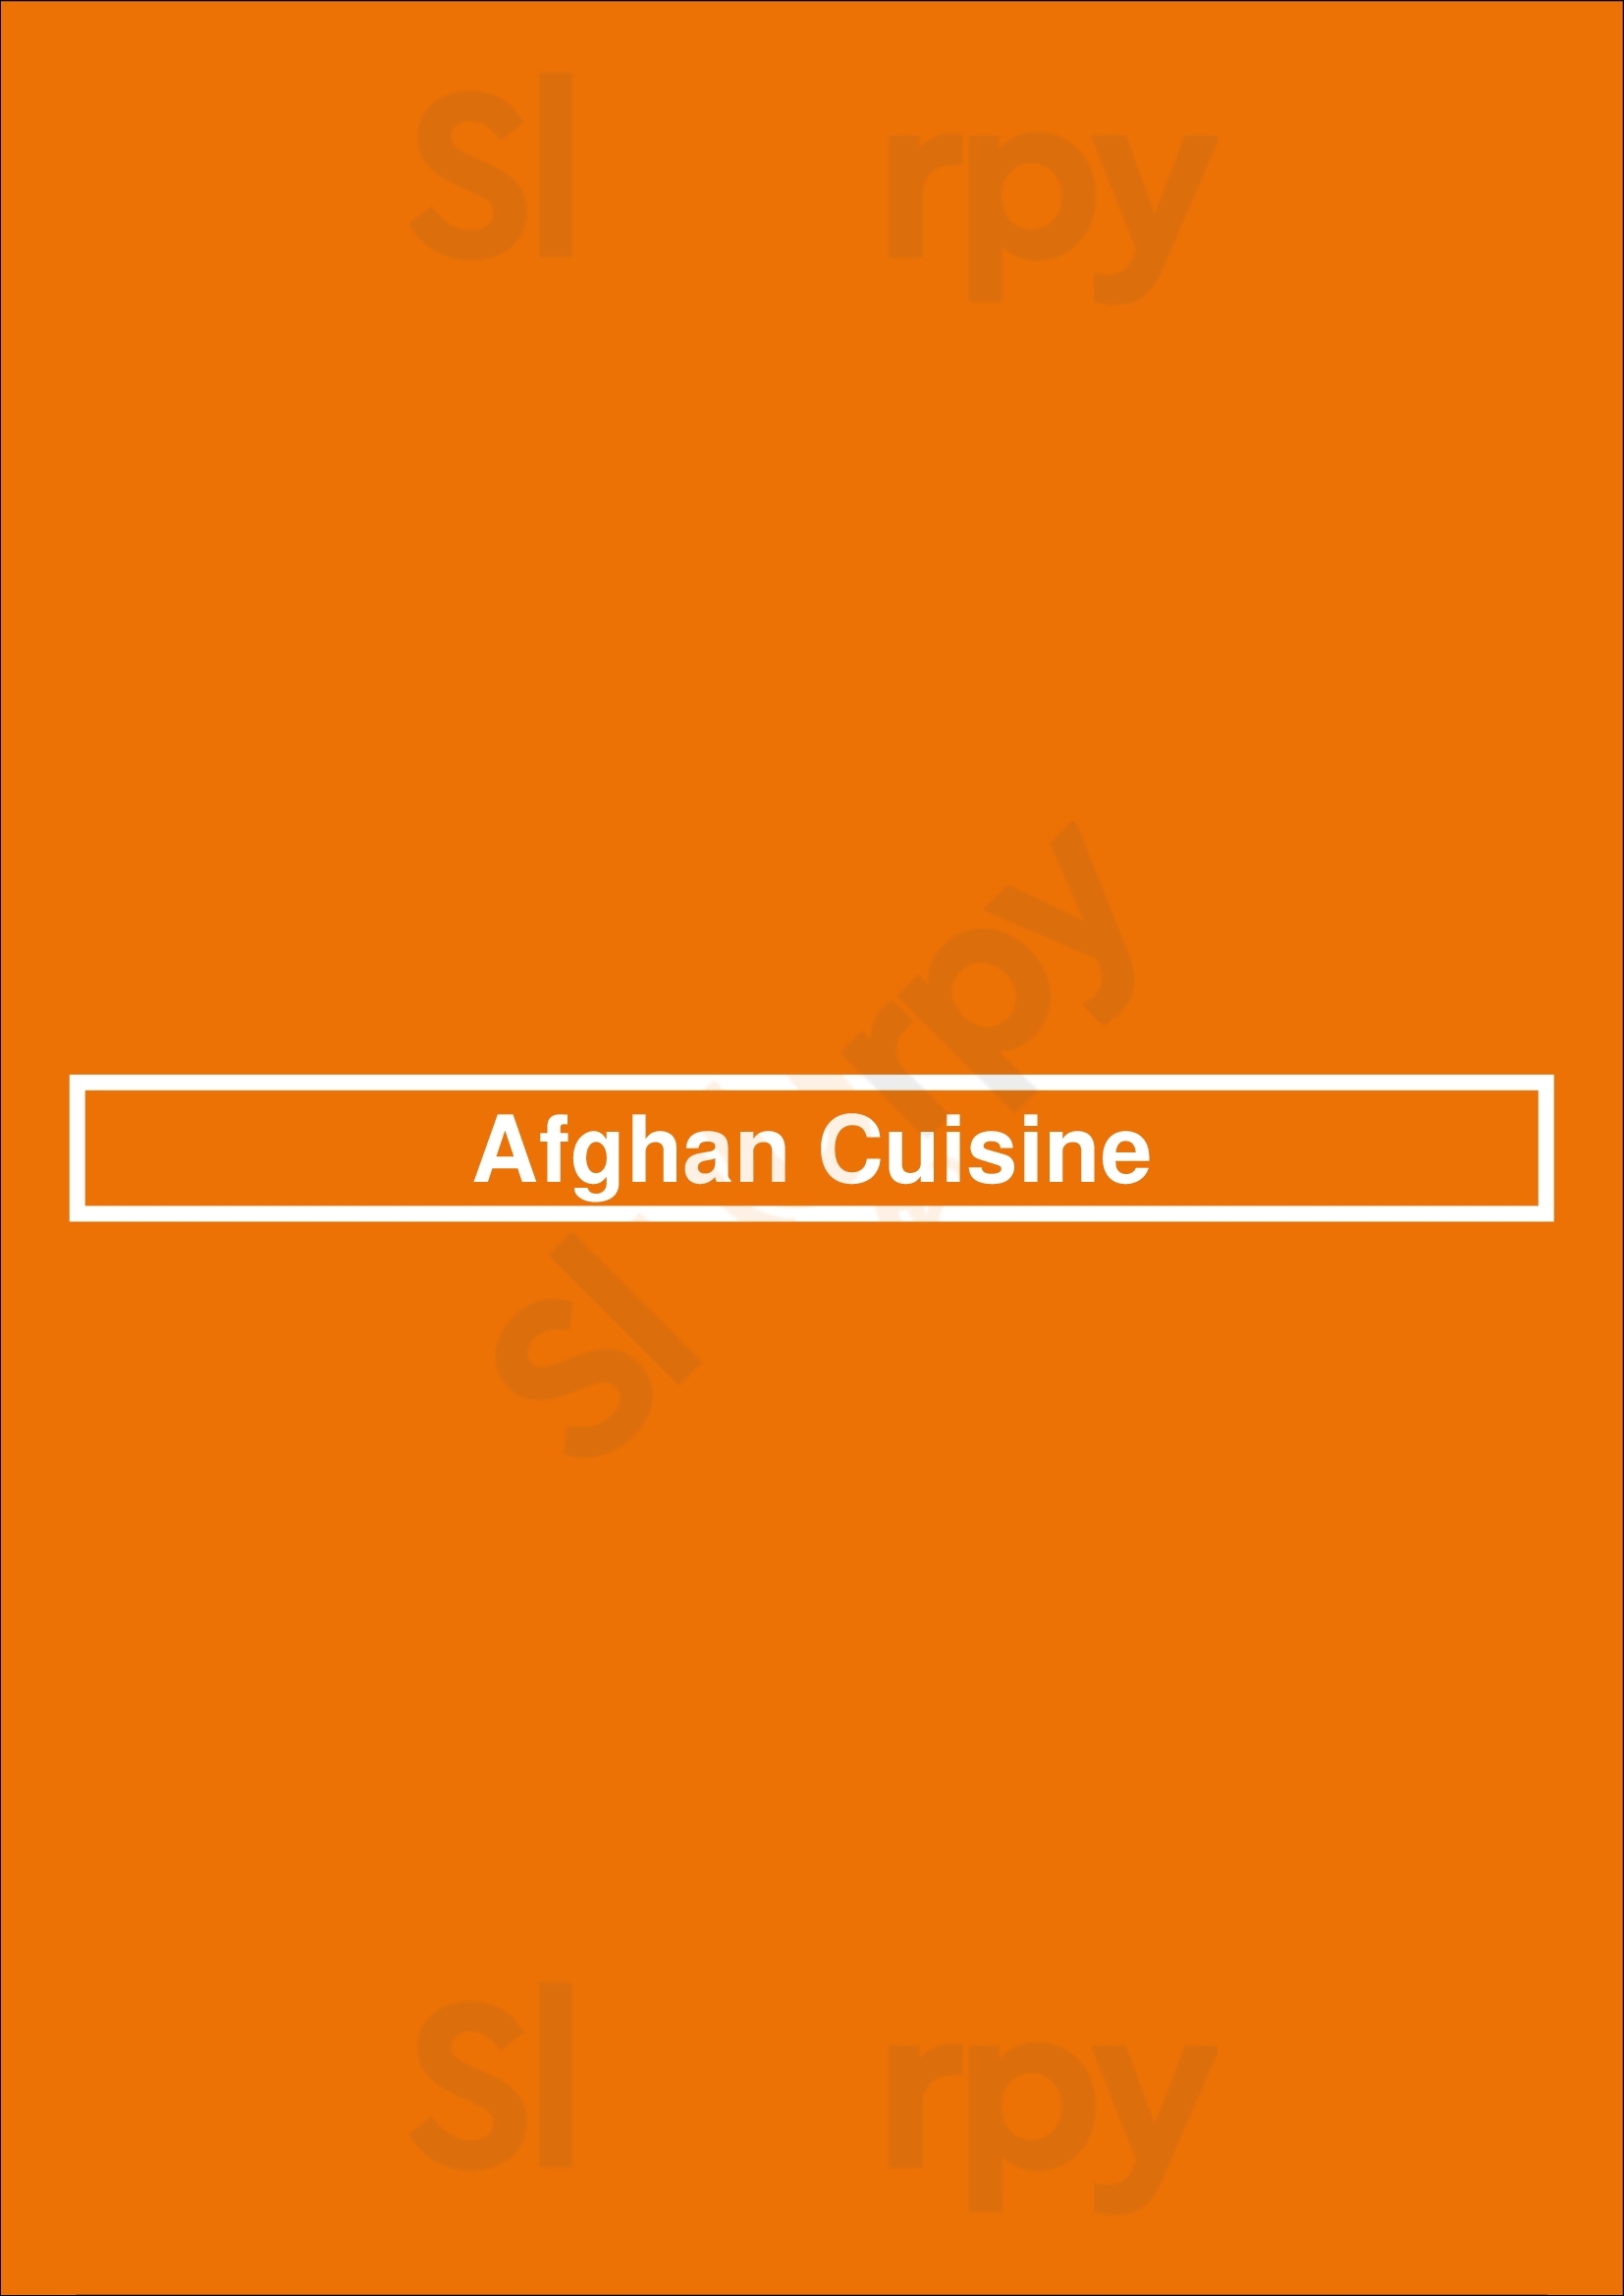 Afghan Cuisine Toronto Menu - 1